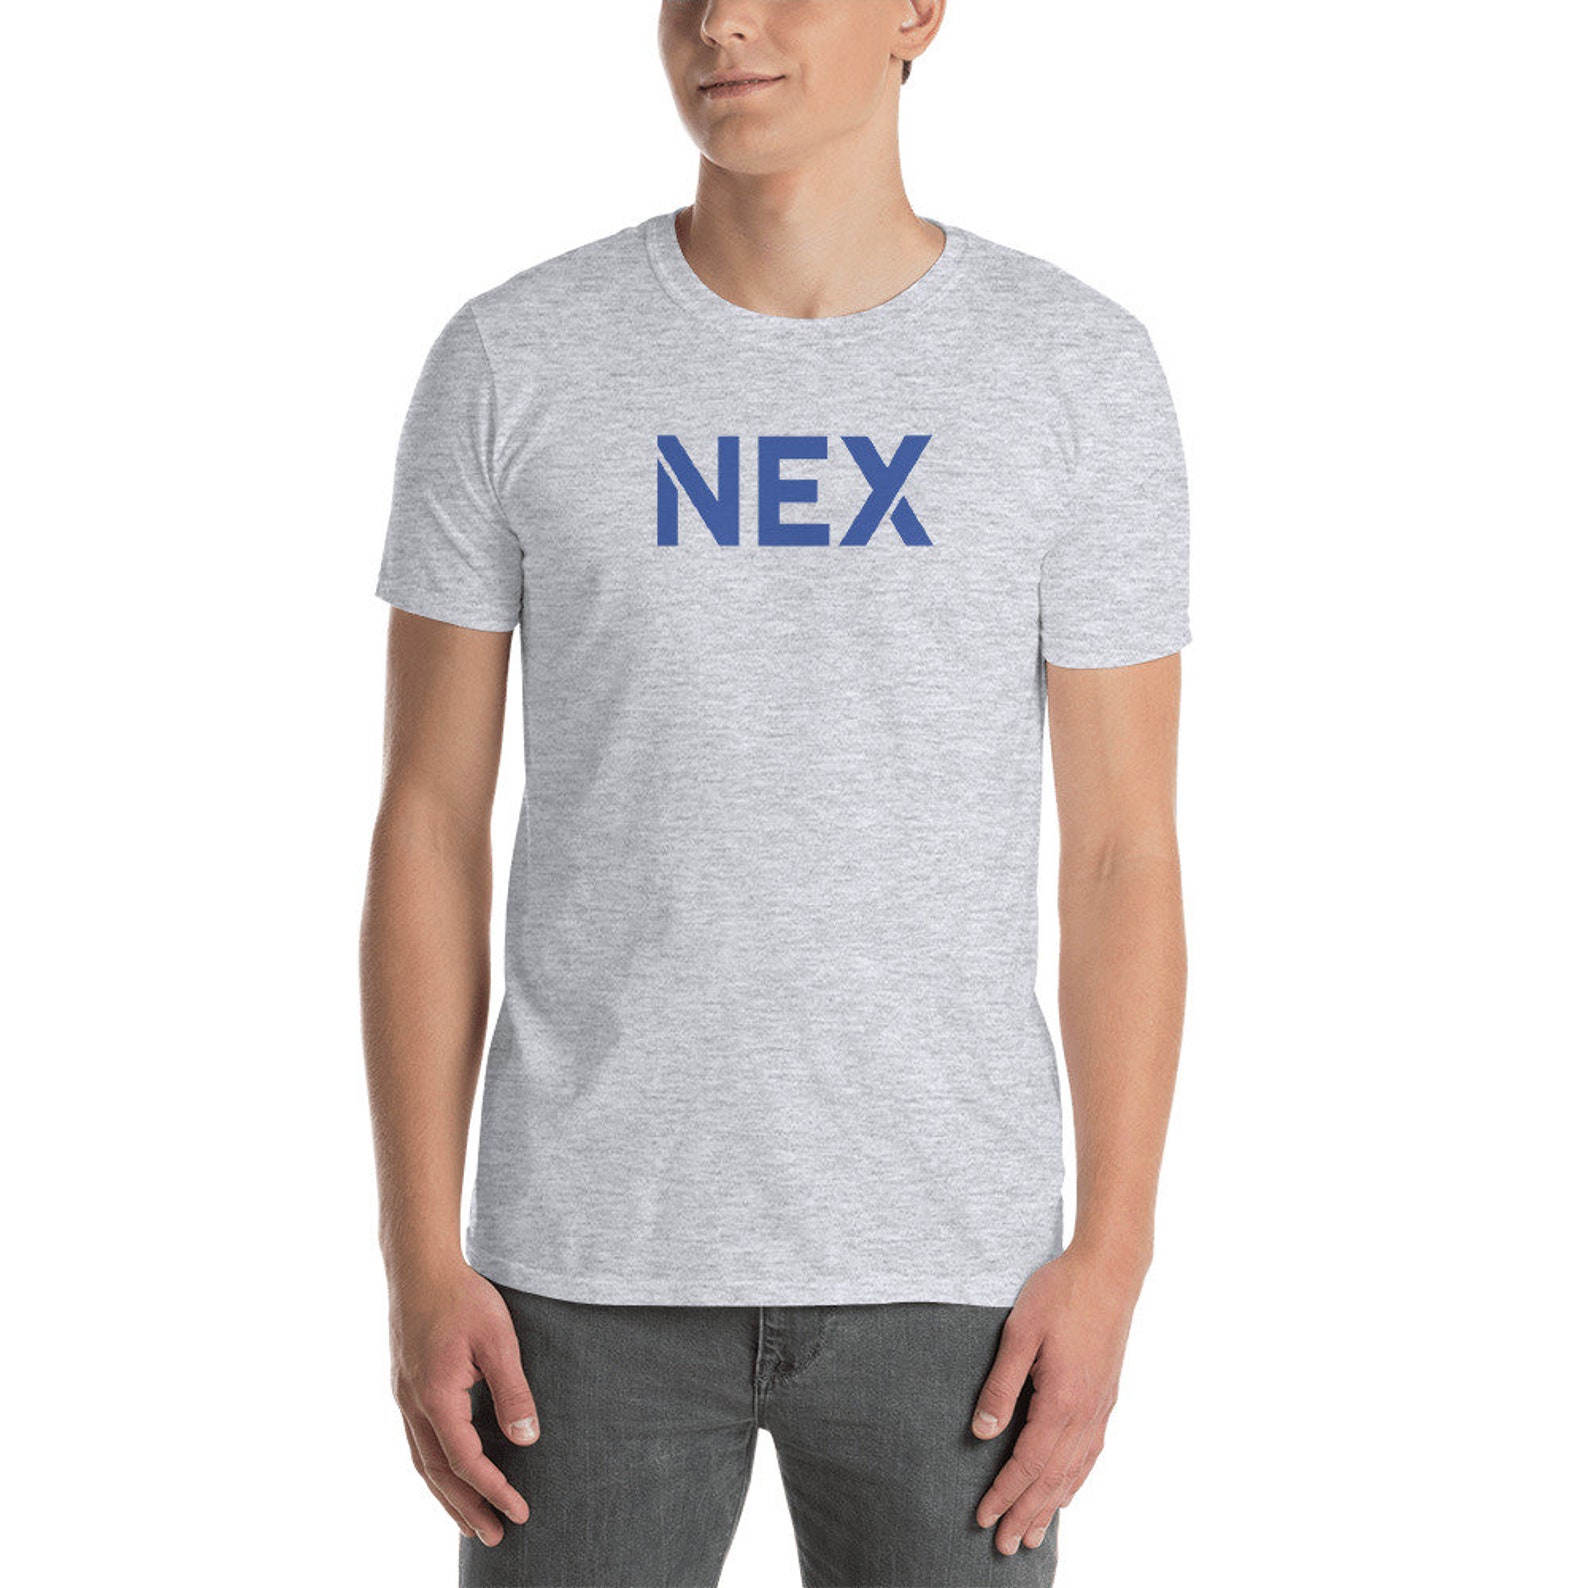 Cool Nex Shirt NEO Exchange T-shirt Neo Tee Shirts Made | Etsy